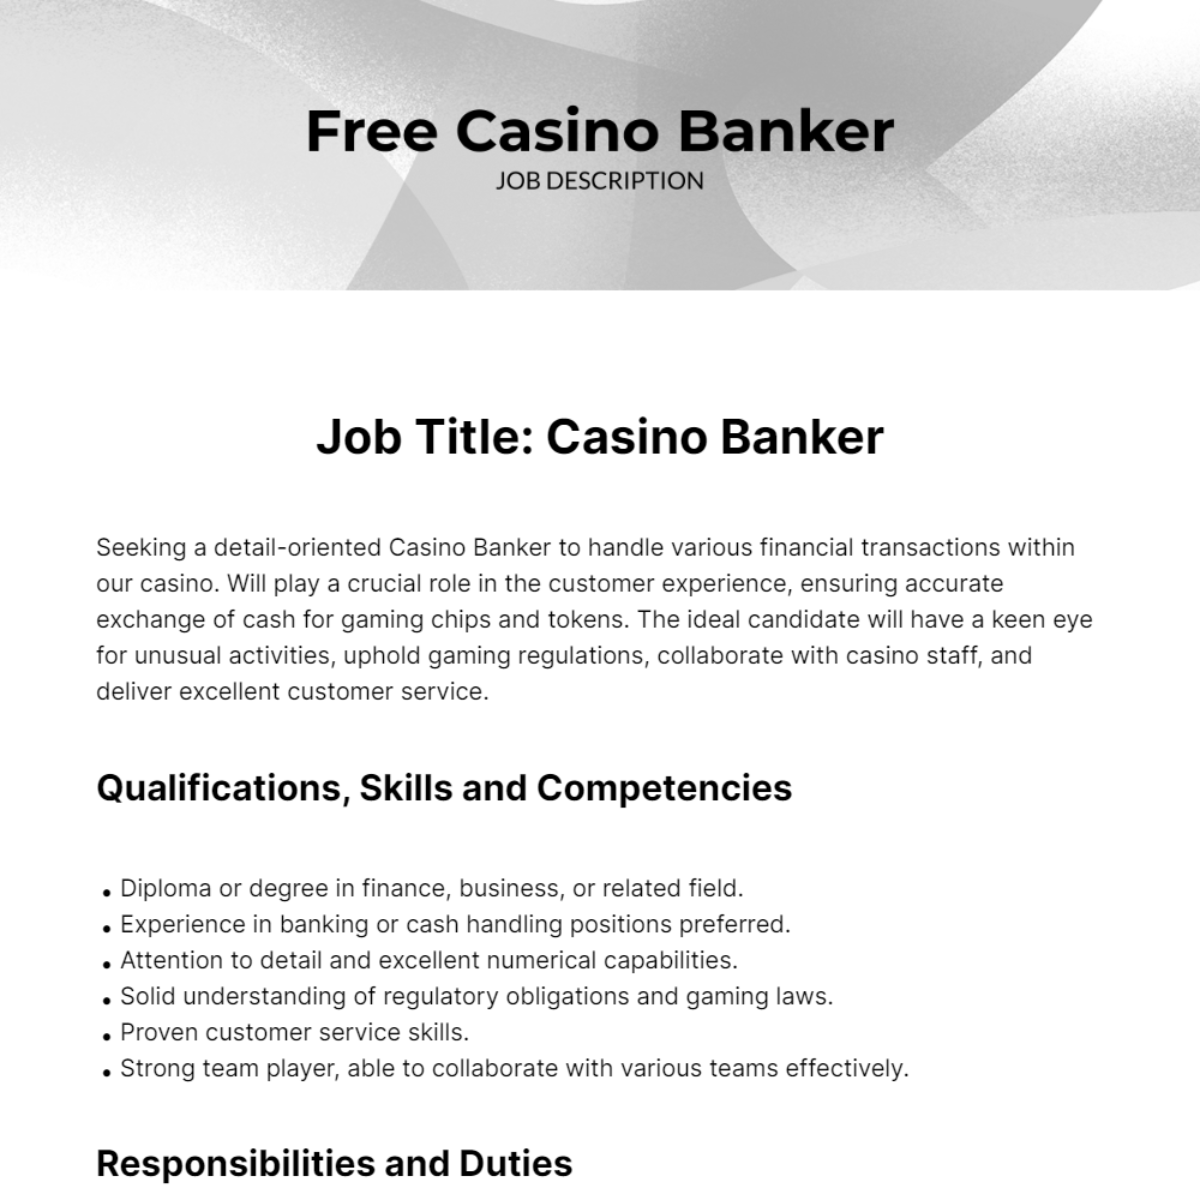 Free Casino Banker Job Description Template